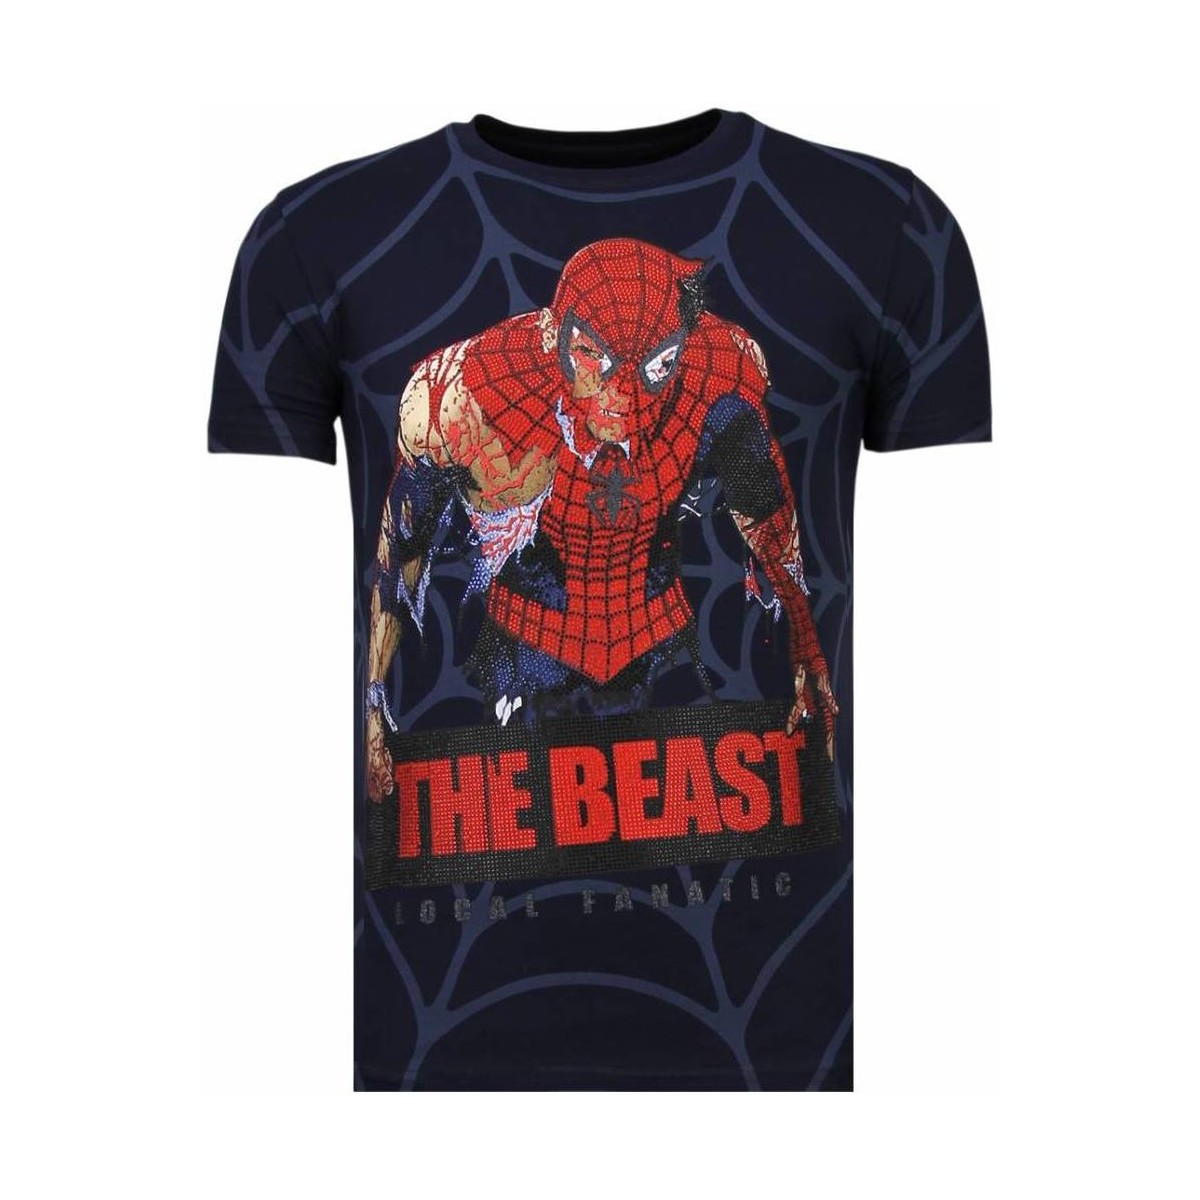 textil Herr T-shirts Local Fanatic The Beast Spider N Blå